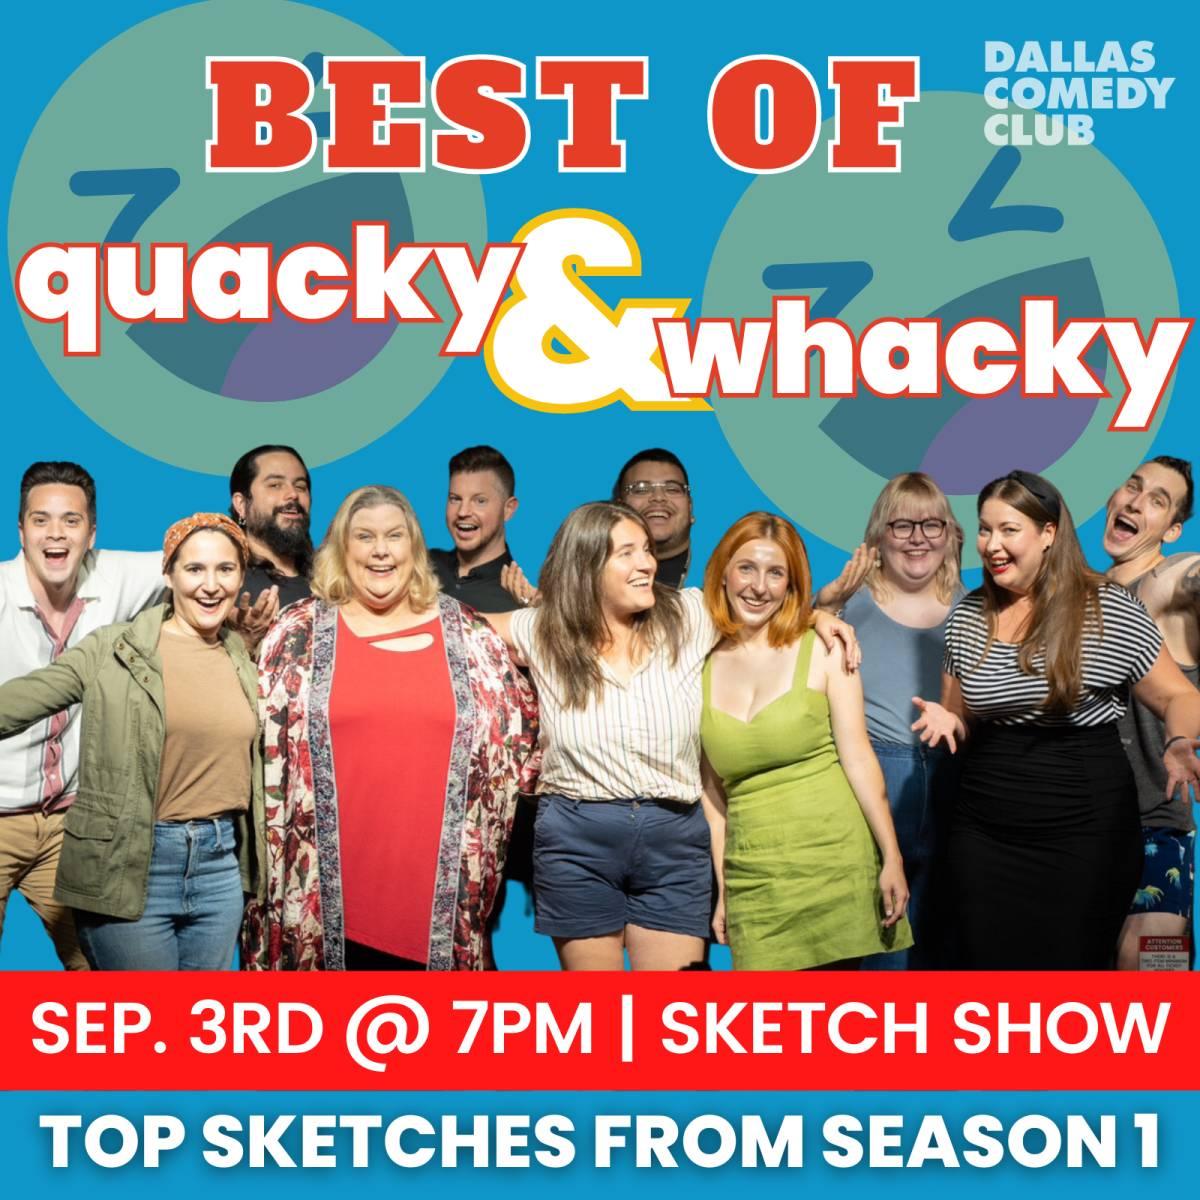 Best Of: Quacky & Whacky Sketch Show